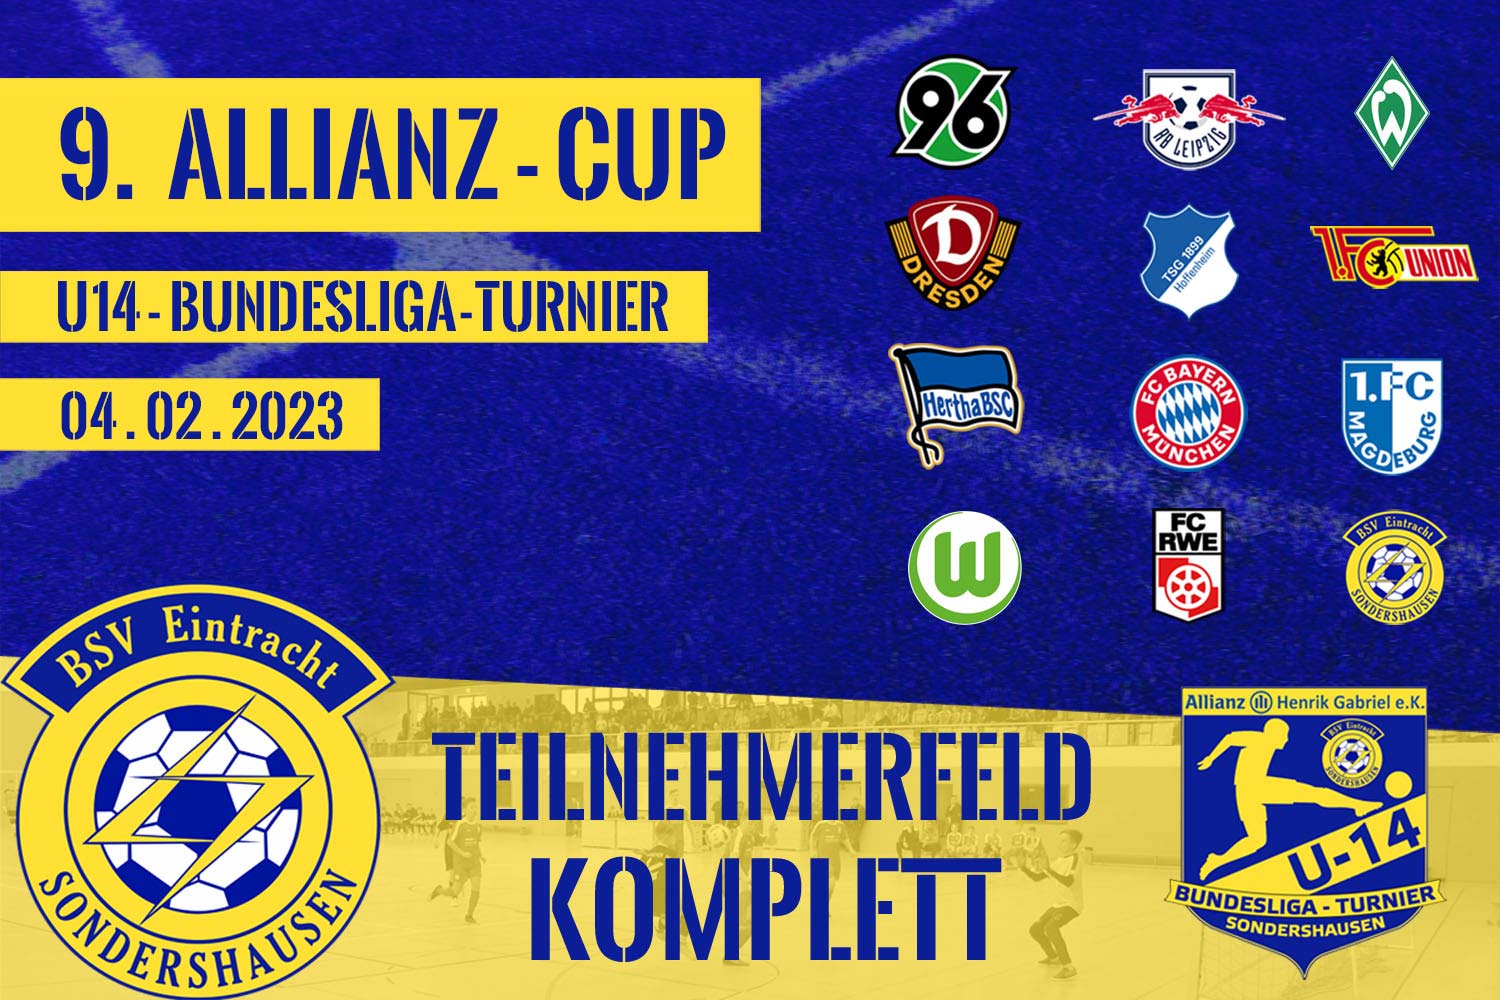 20220719170759_9. Allianz Cup